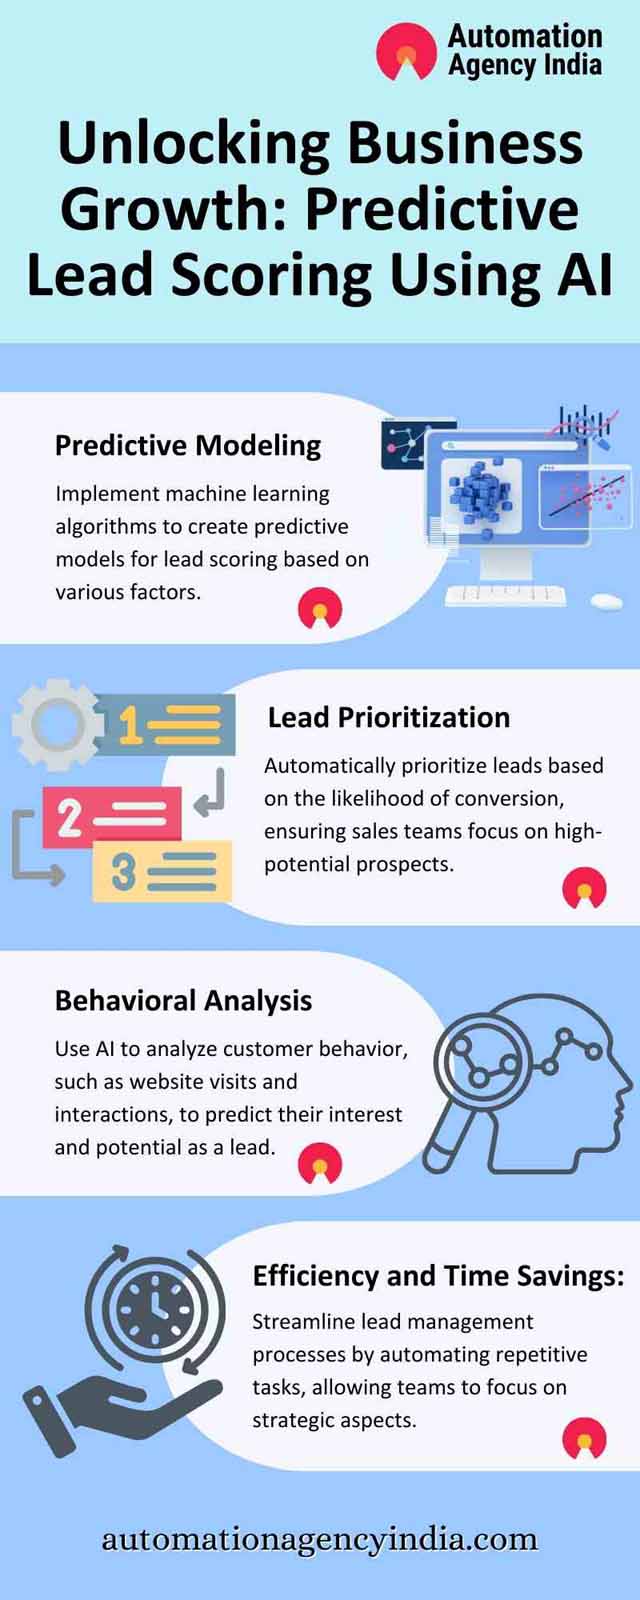 Infographic on Predictive Lead Scoring Using AI